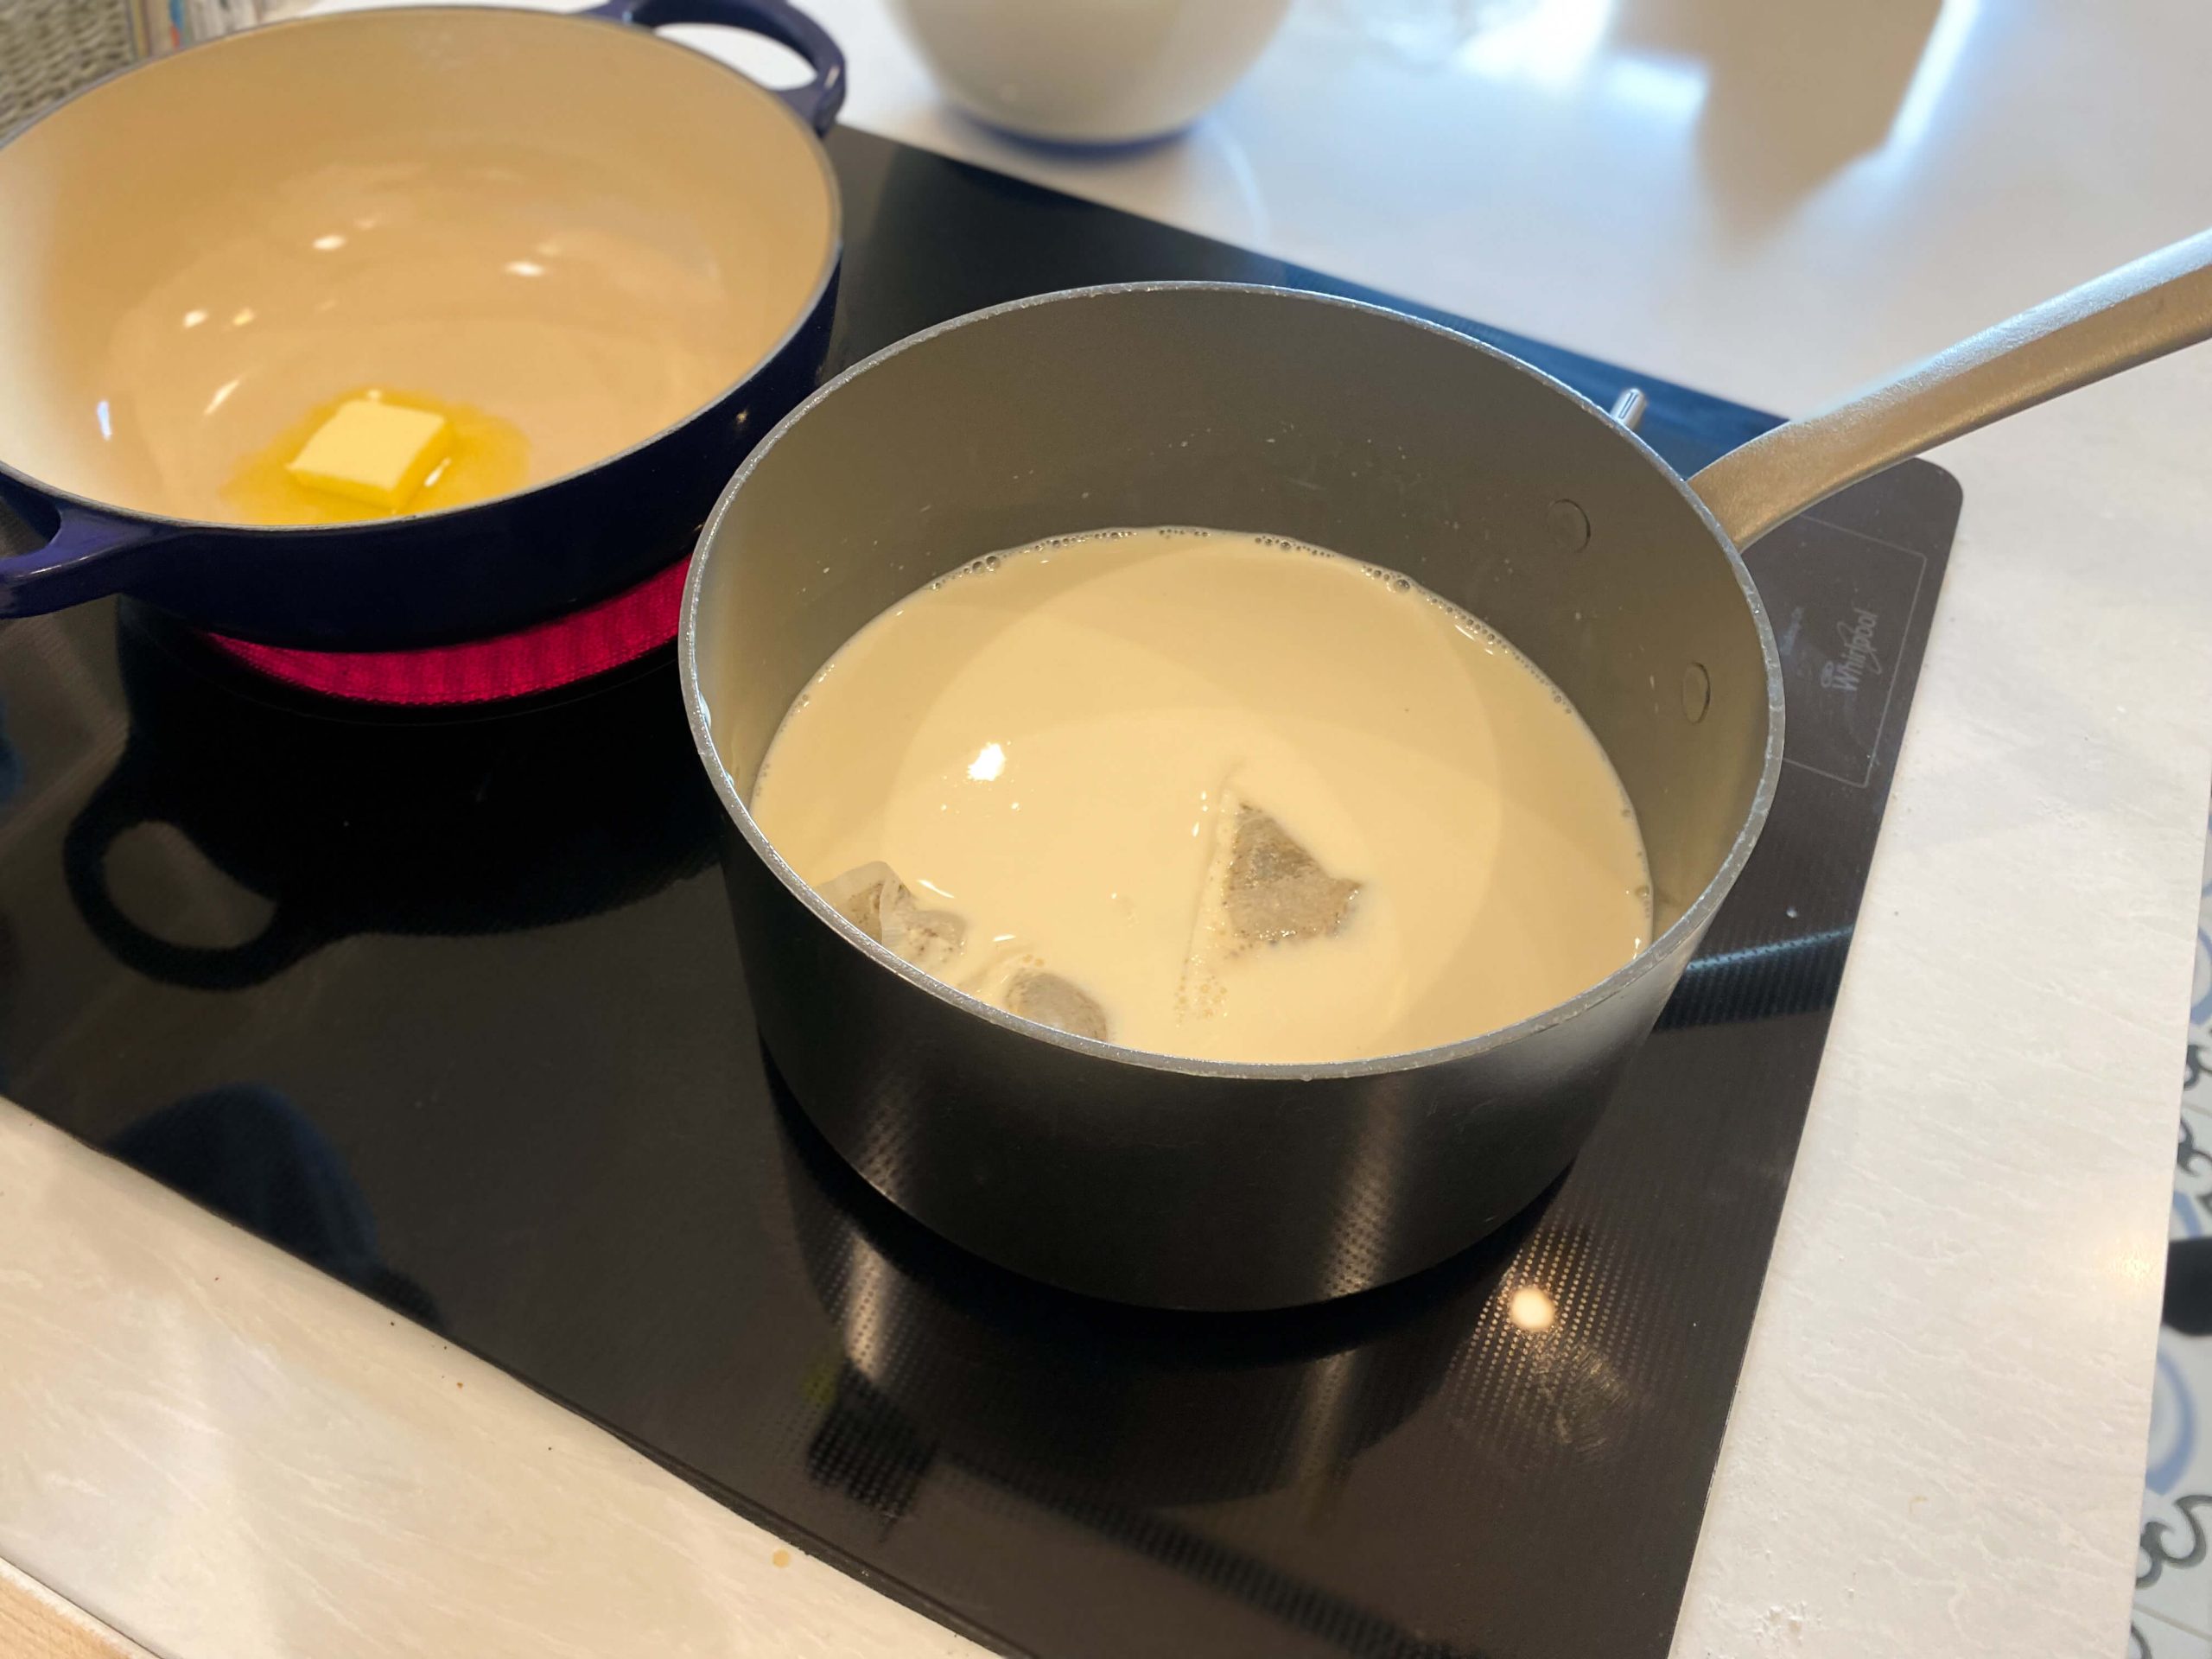 evaporated milk, 2% milk, sugar, chai tea bags heating in a pot